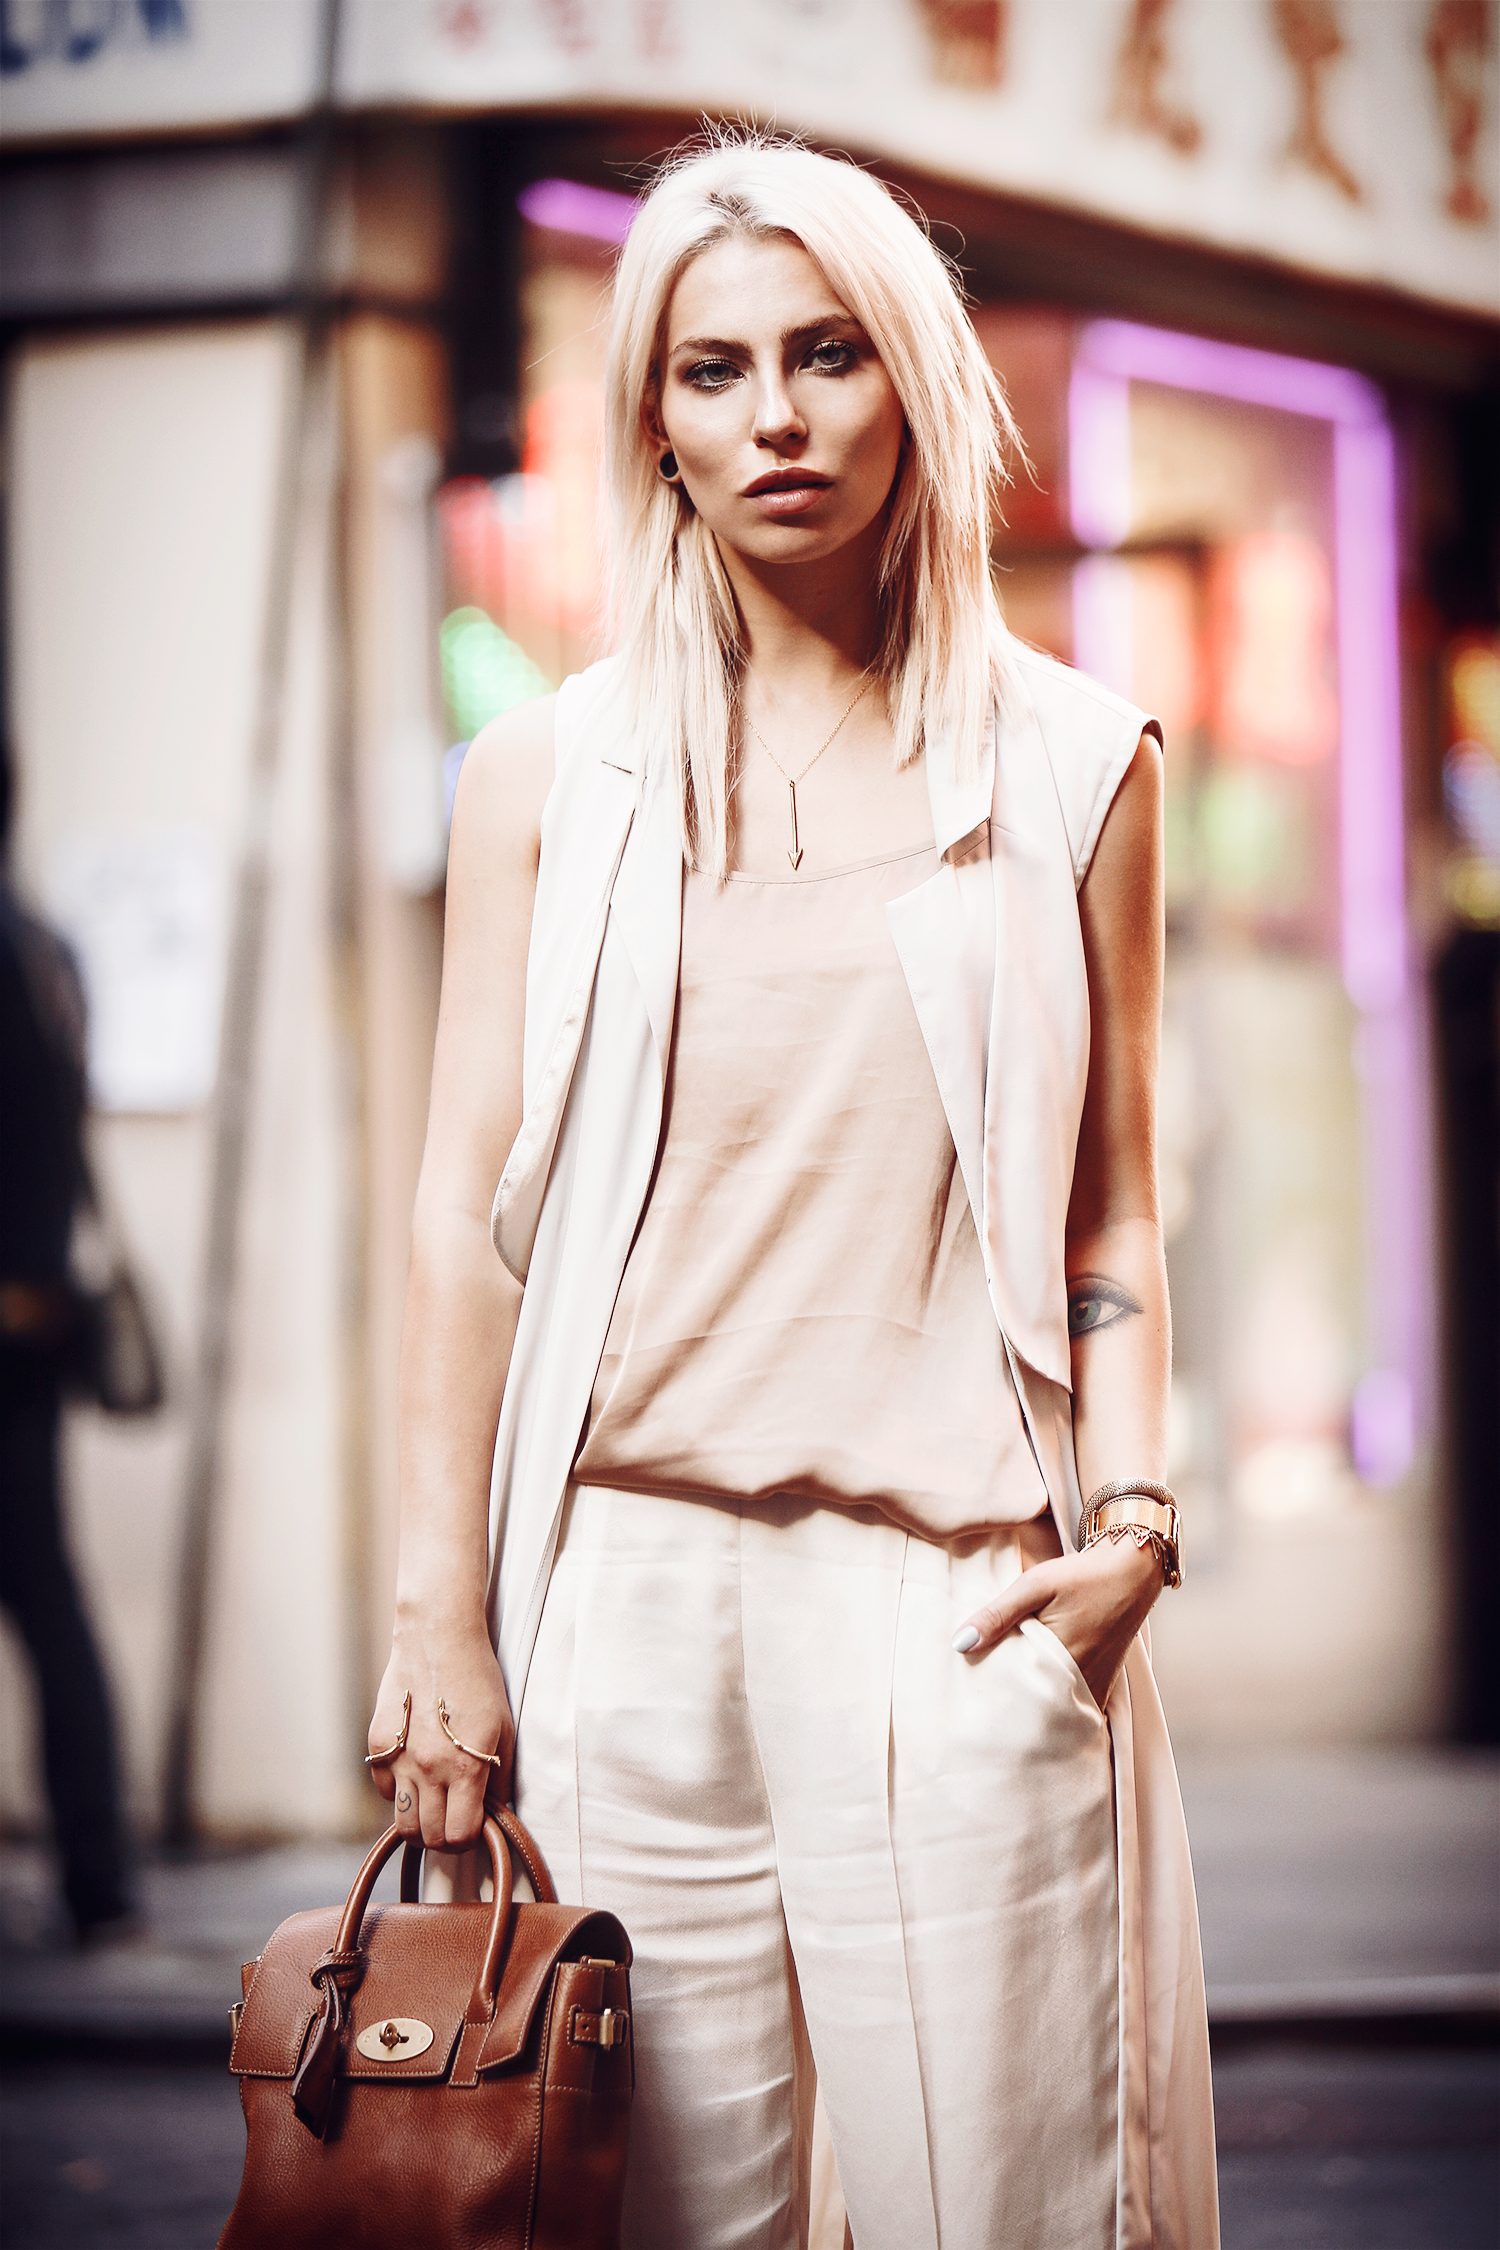 street style shot in Chinatown/New York during fashion week via Masha Sedgwick